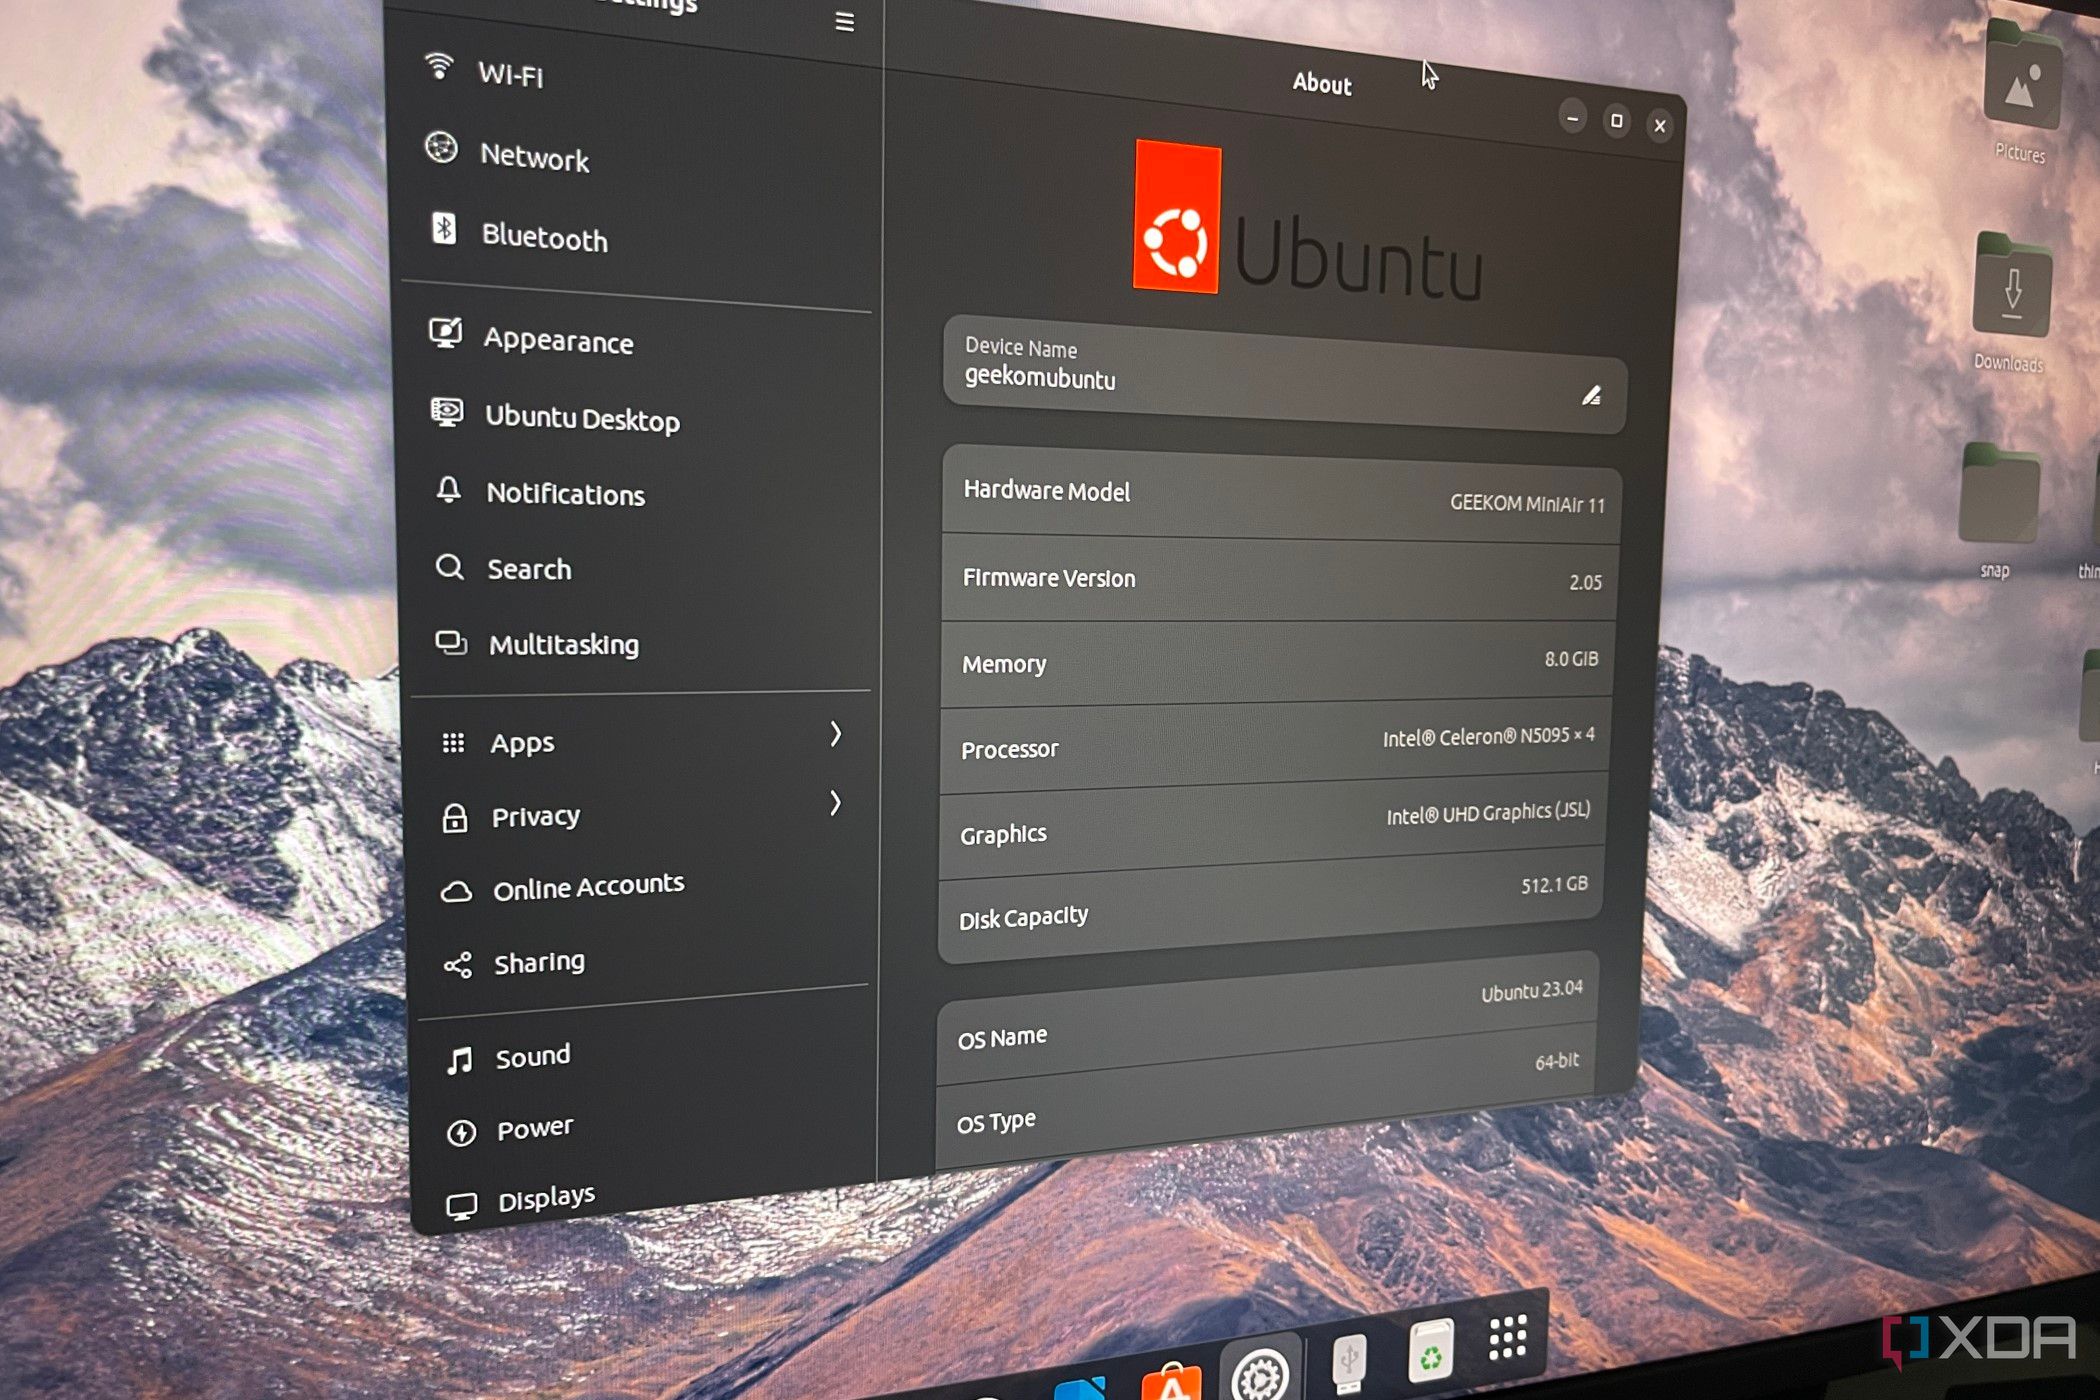 Ubuntu popup screen on a desktop